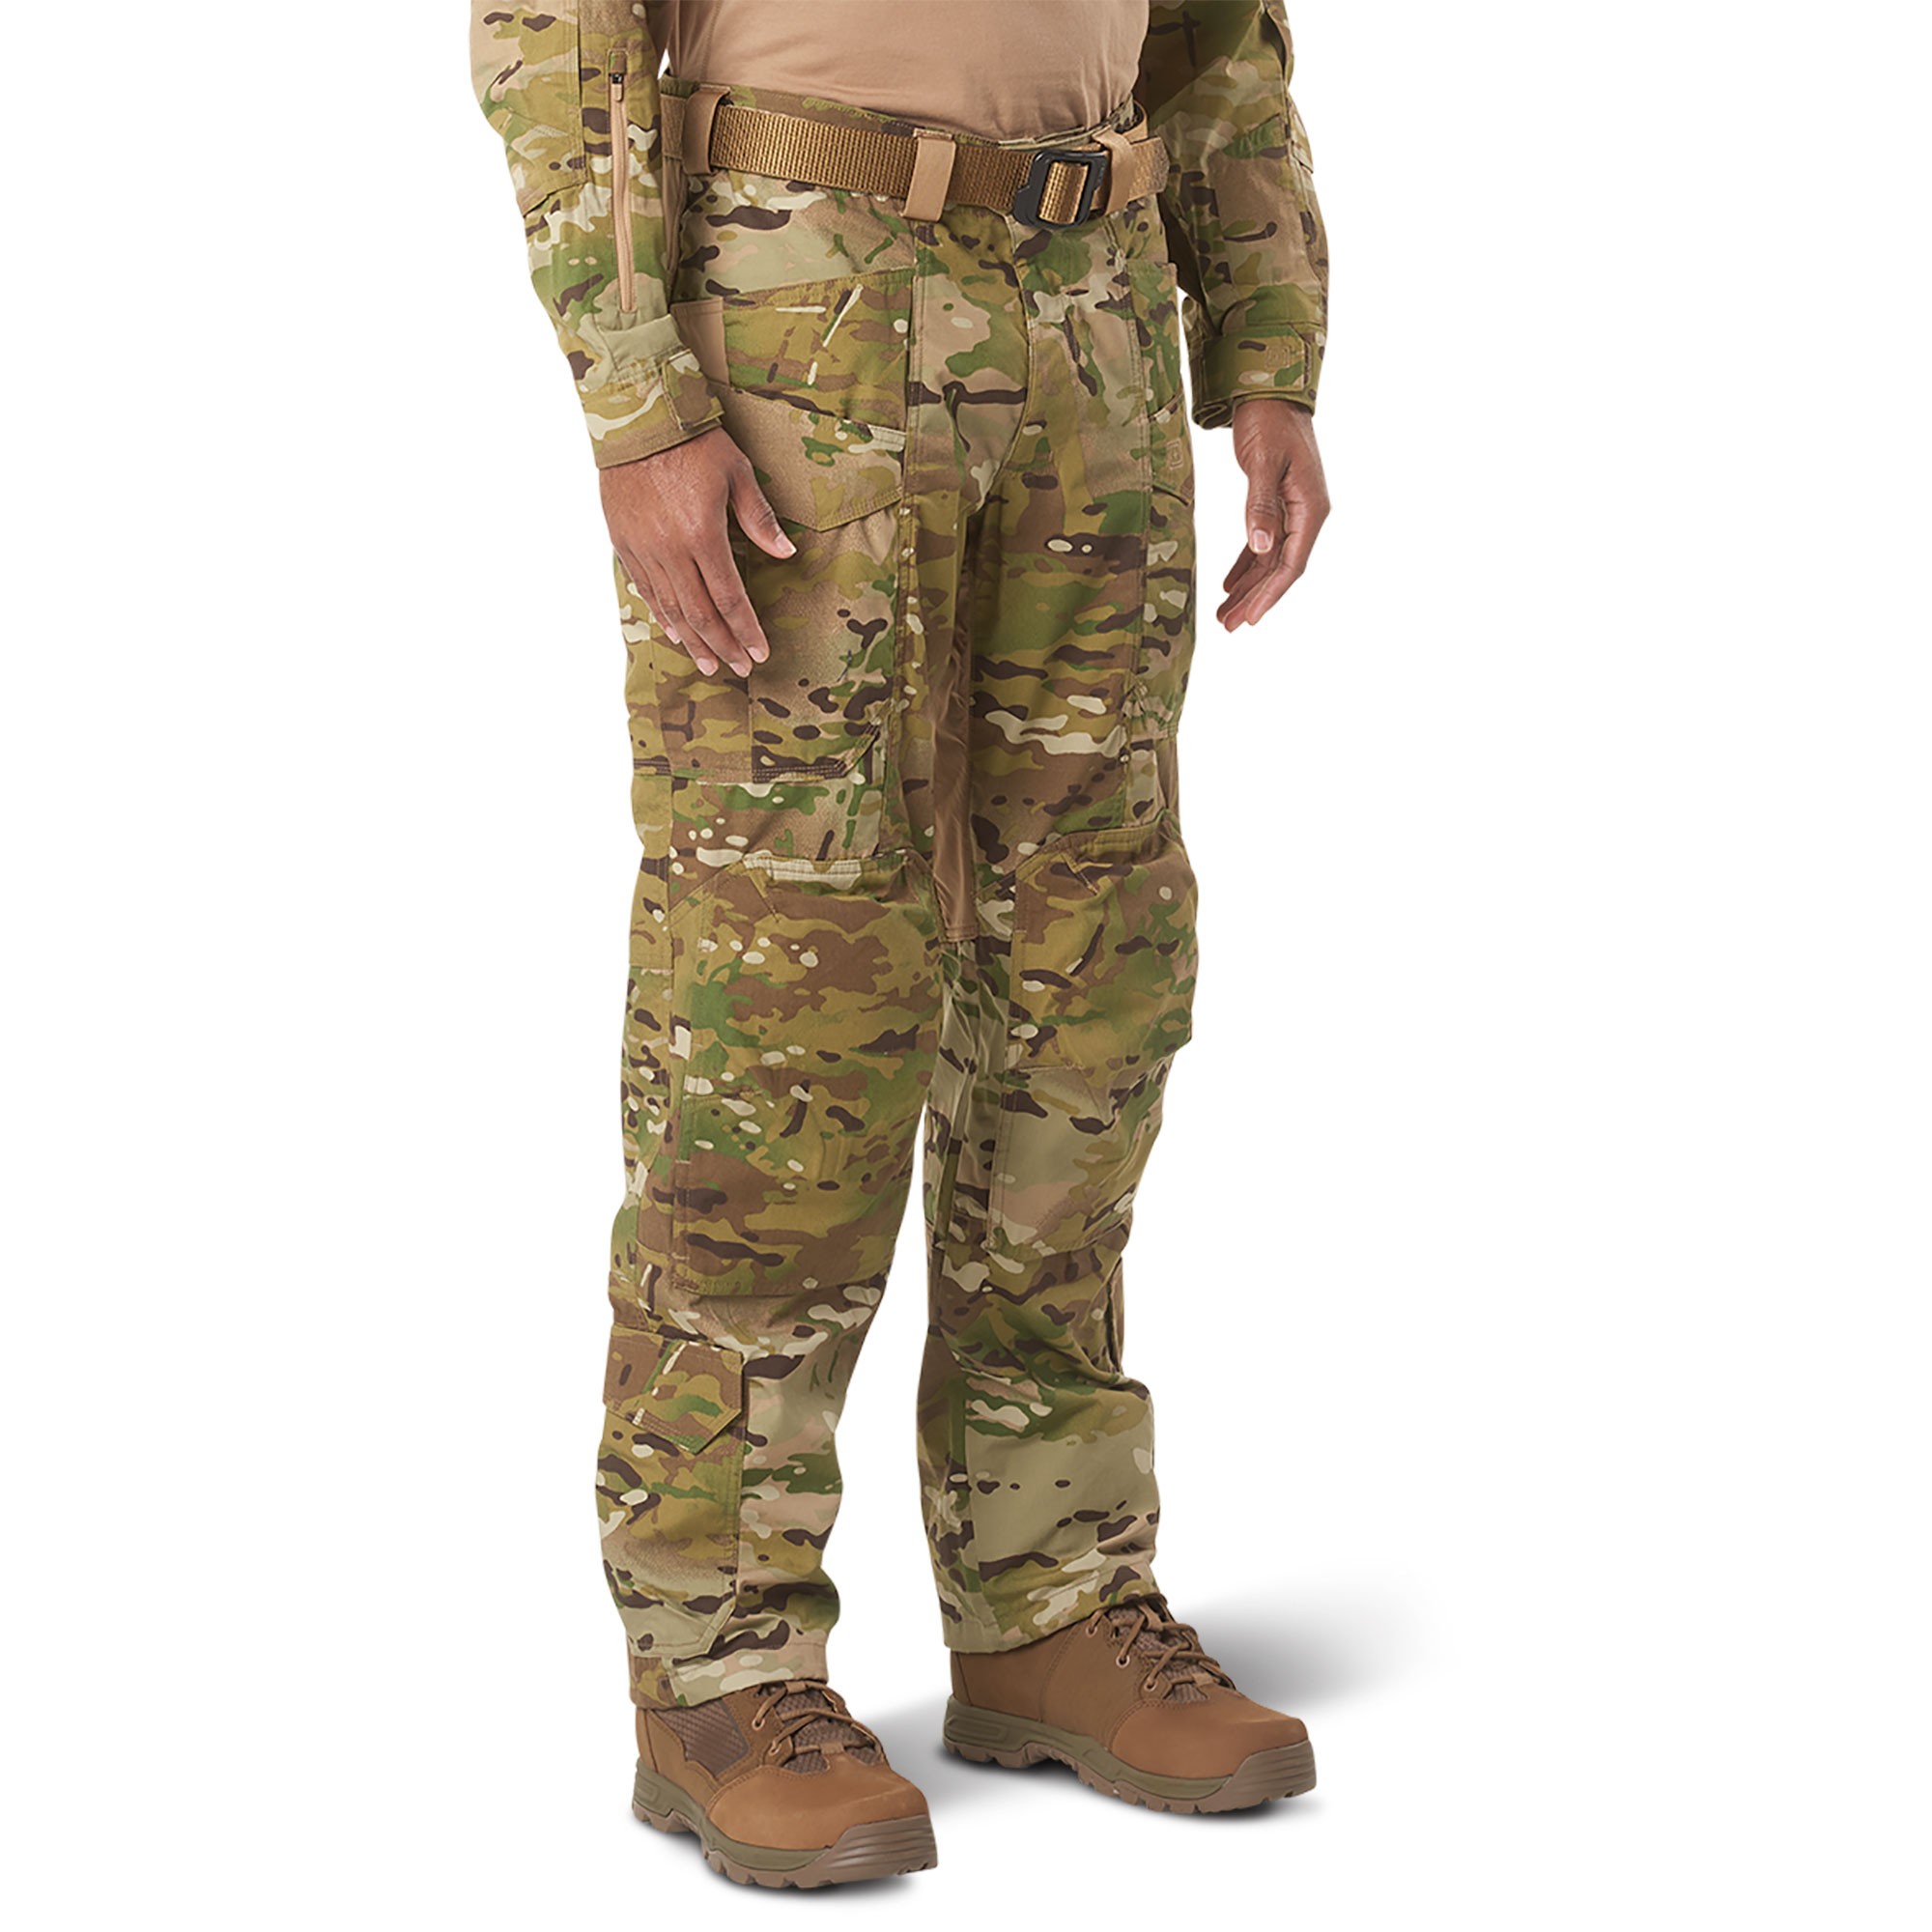 5.11 Tactical Men's Defender-Flex Range Pant